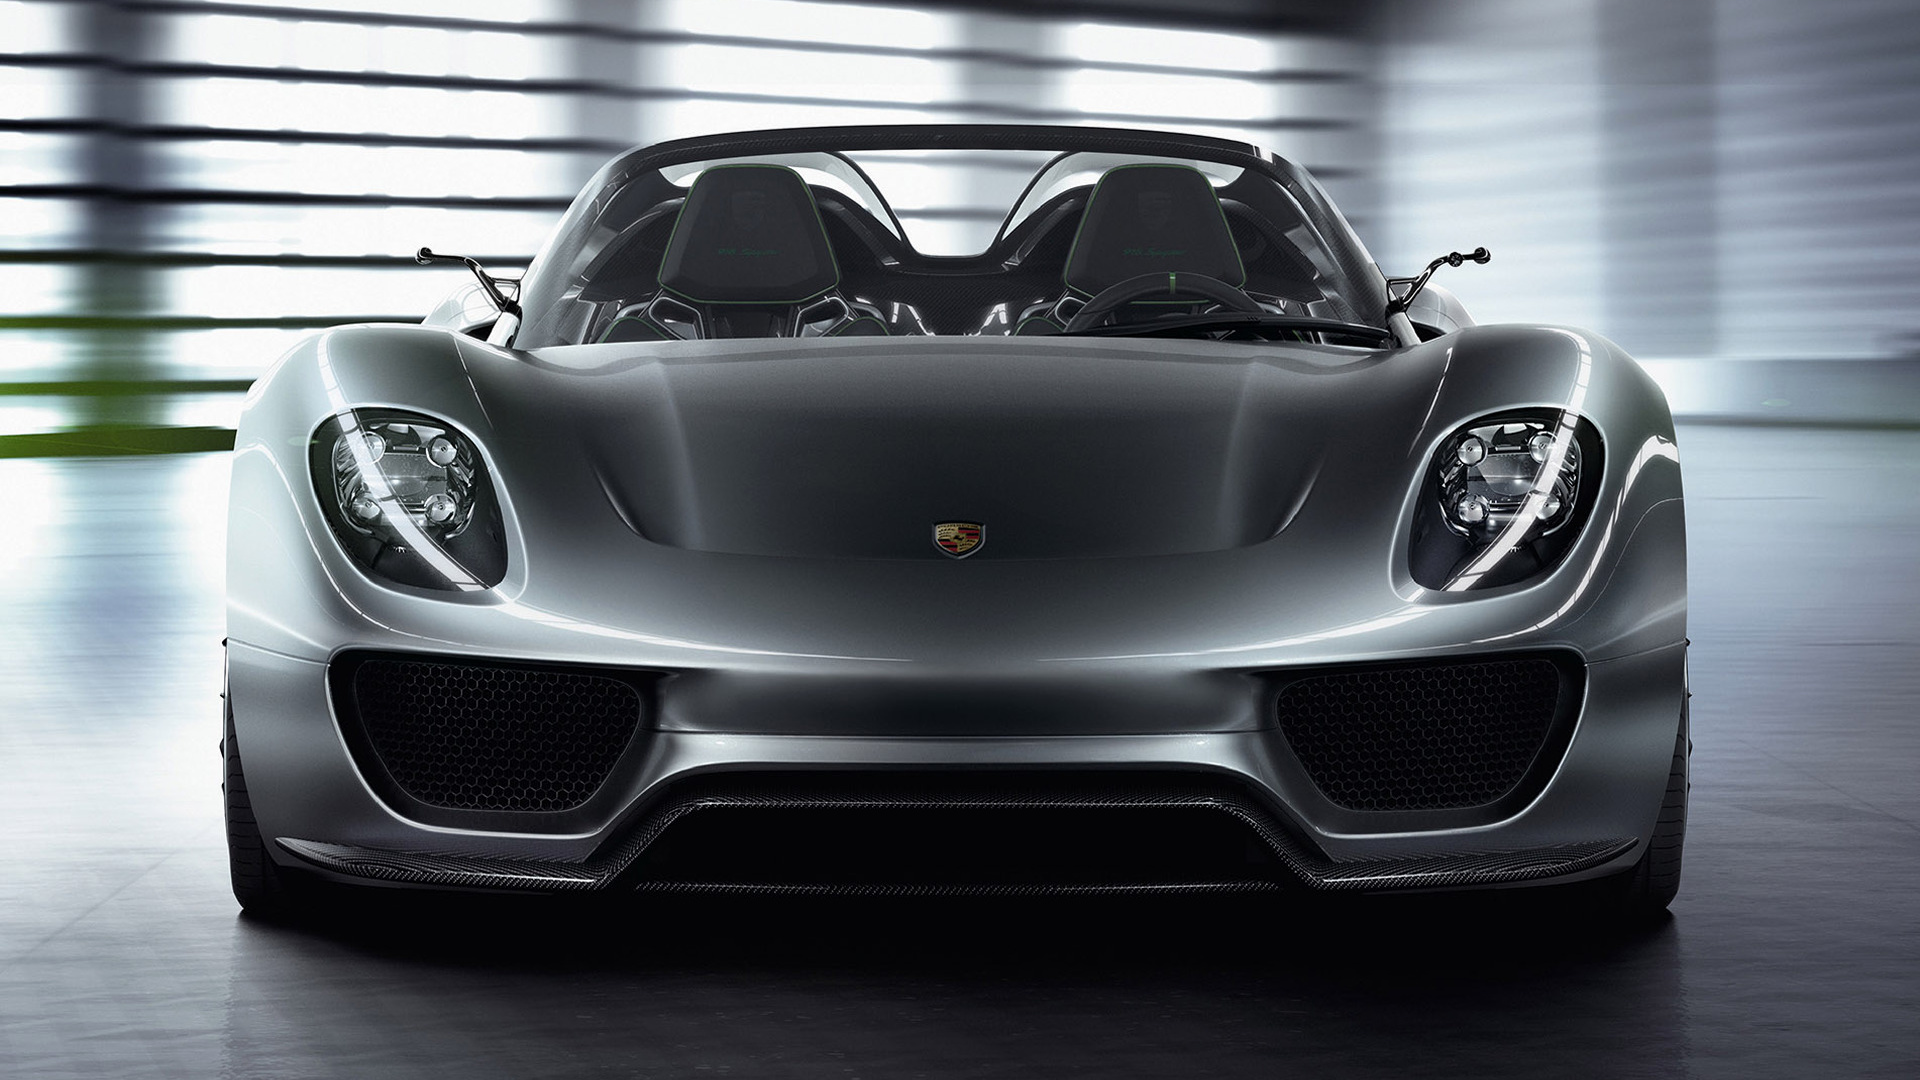 2010 Porsche 918 Spyder Concept - Wallpapers and HD Images | Car Pixel